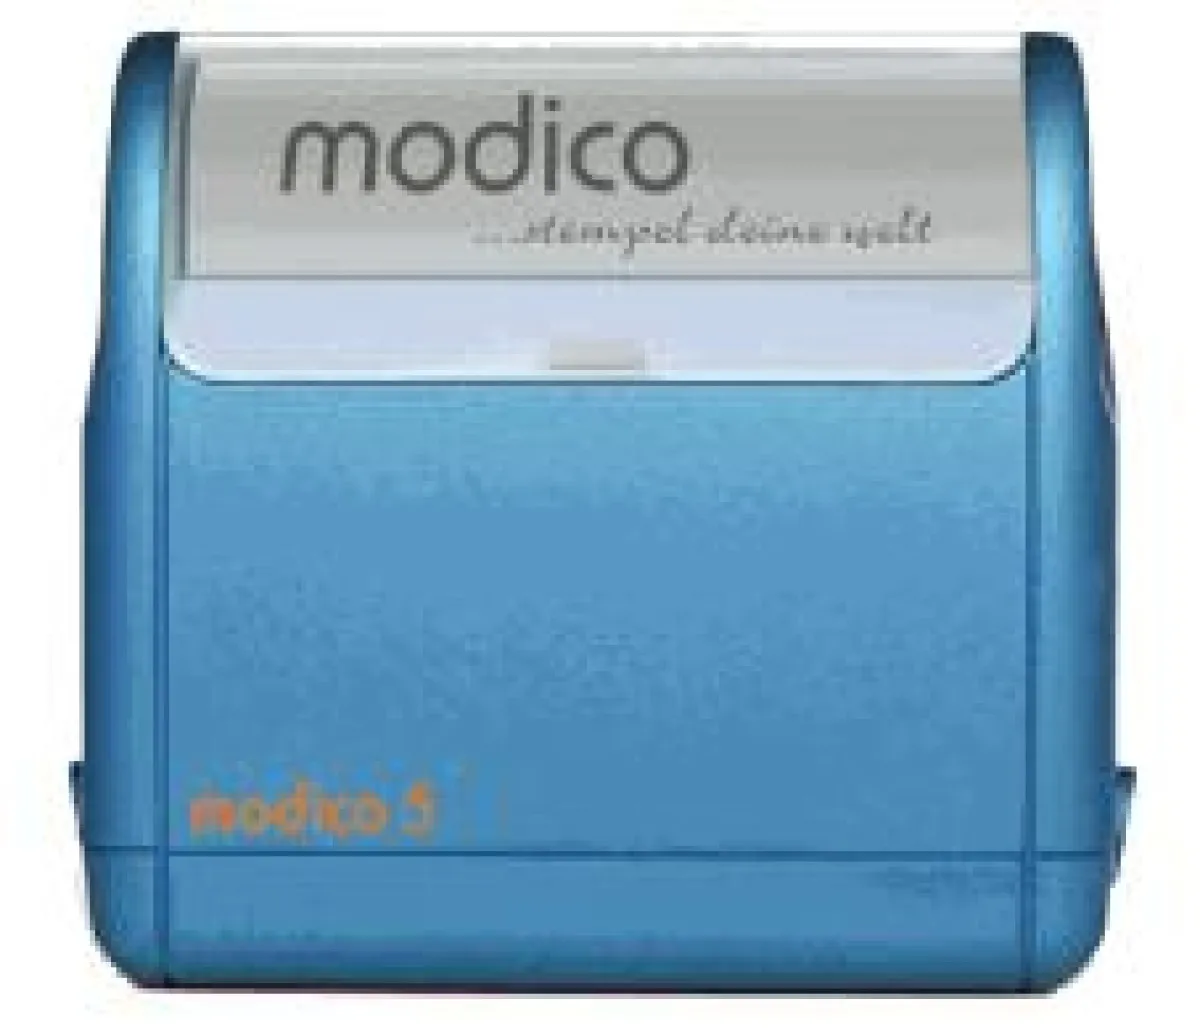 Modico 5 stamp